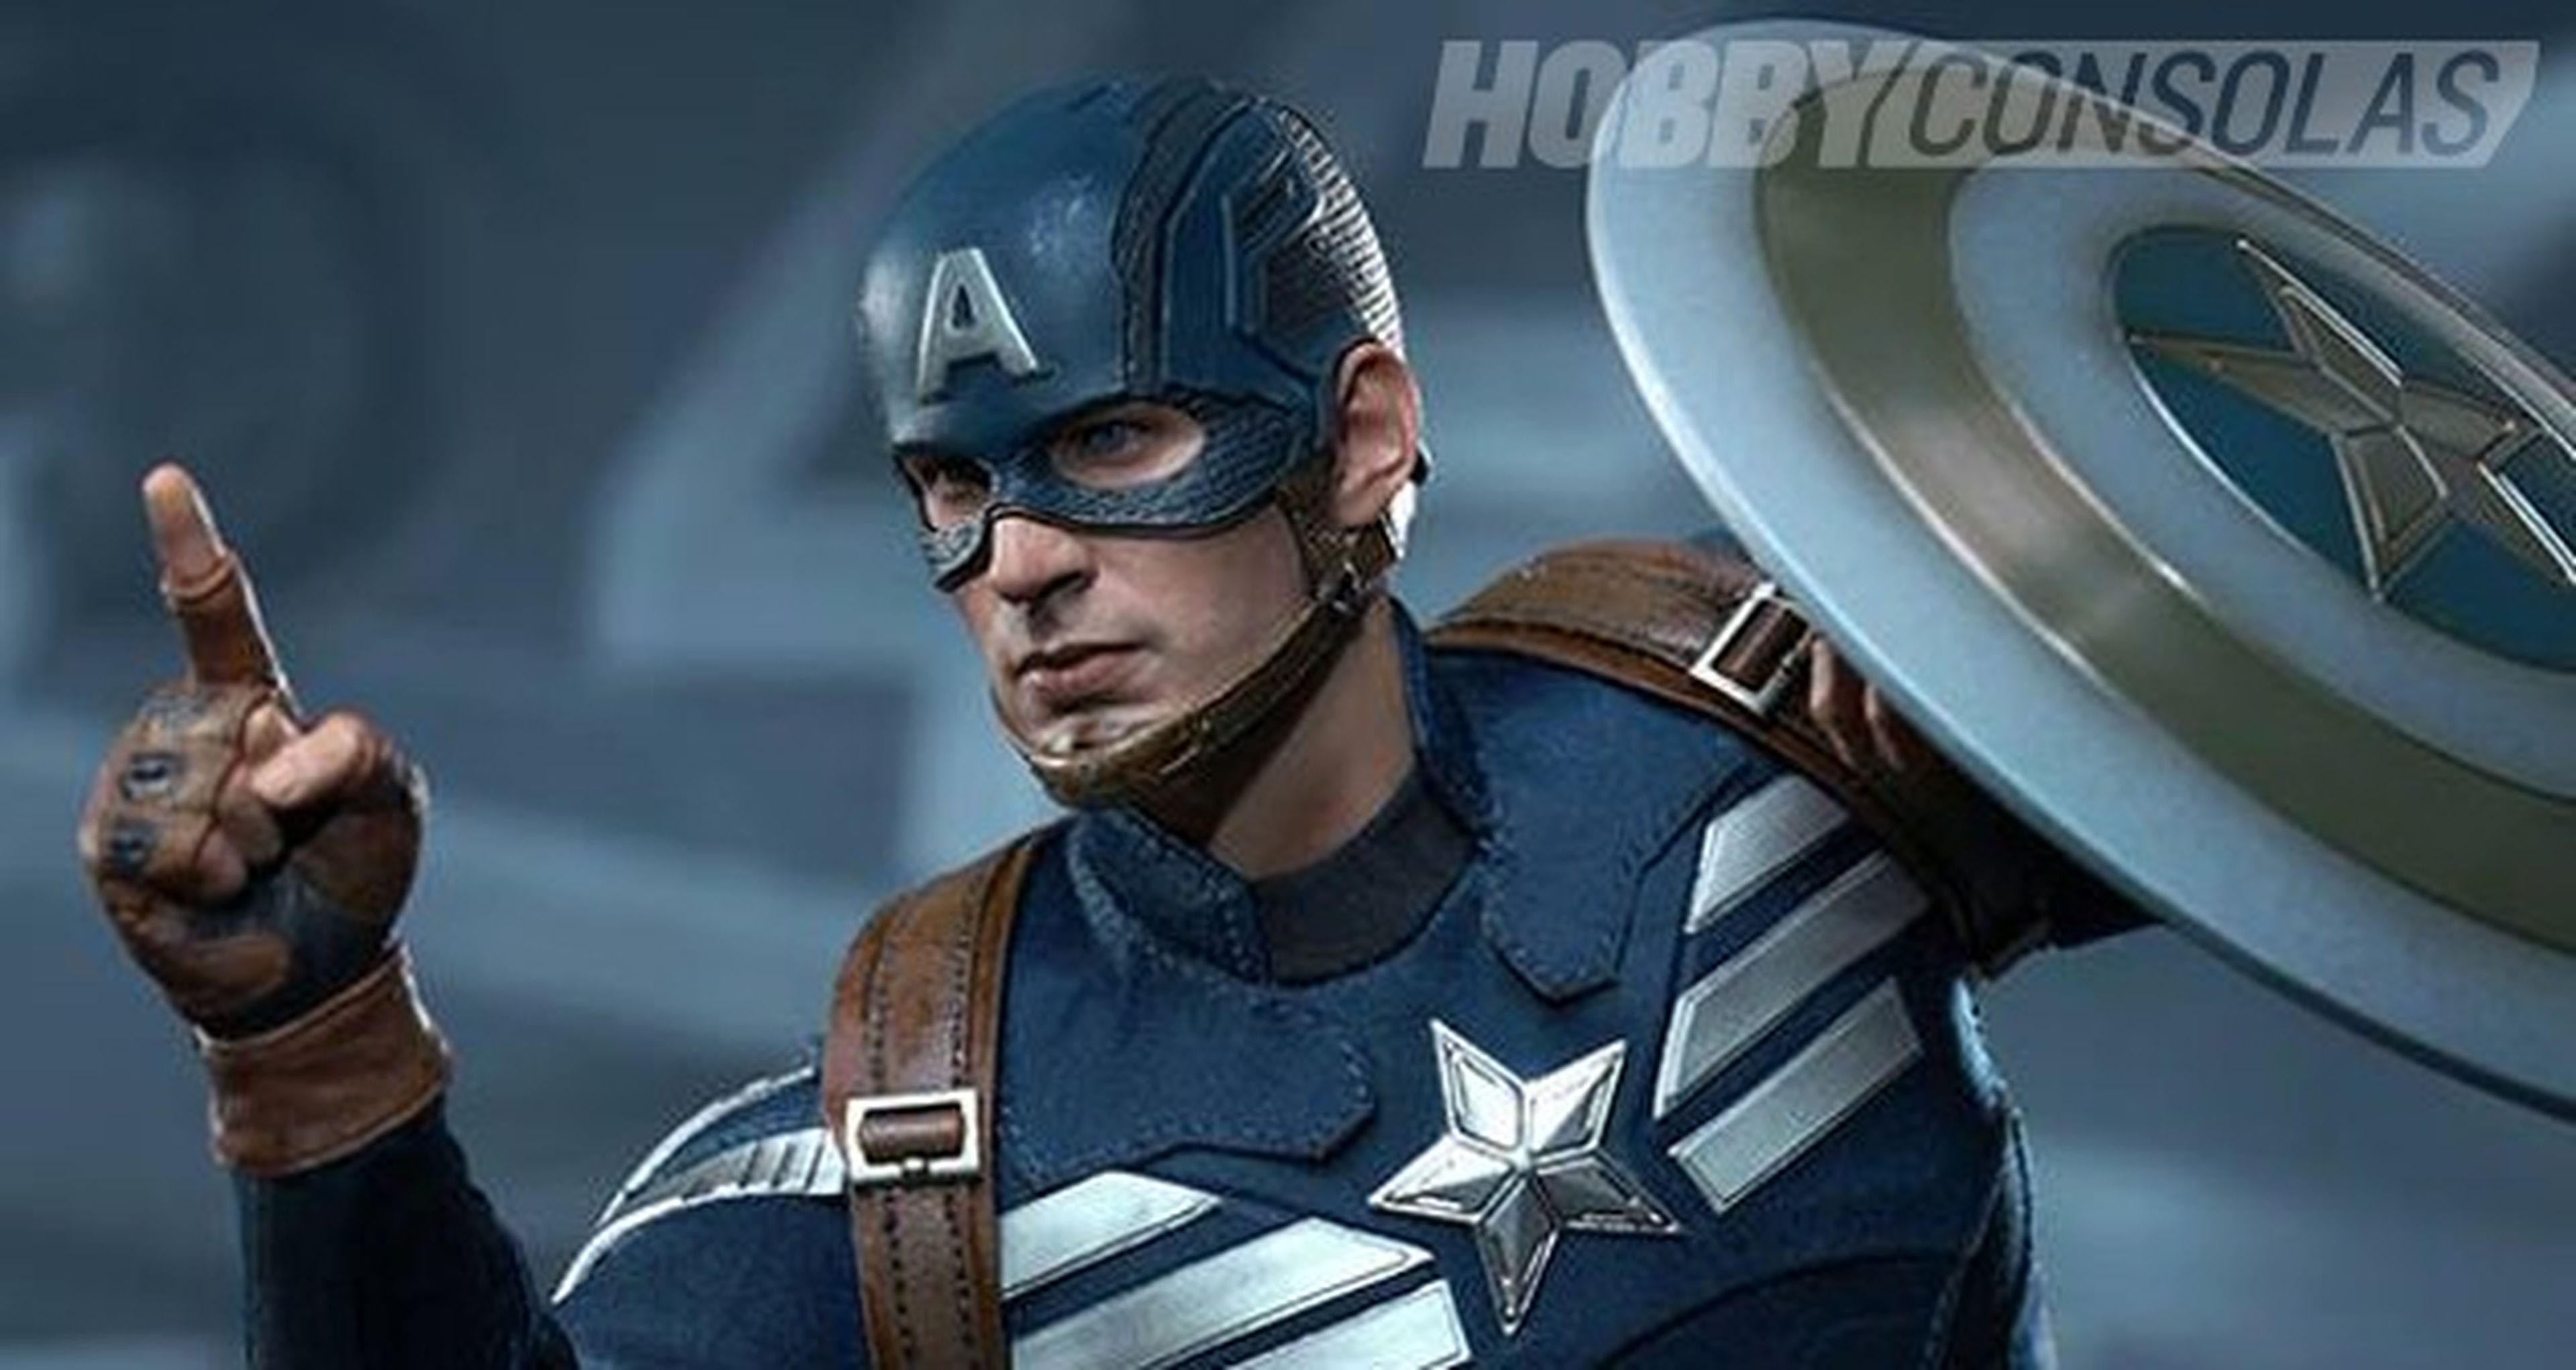 Capitán América en uniforme de S.T.R.Y.K.E. de Hot Toys